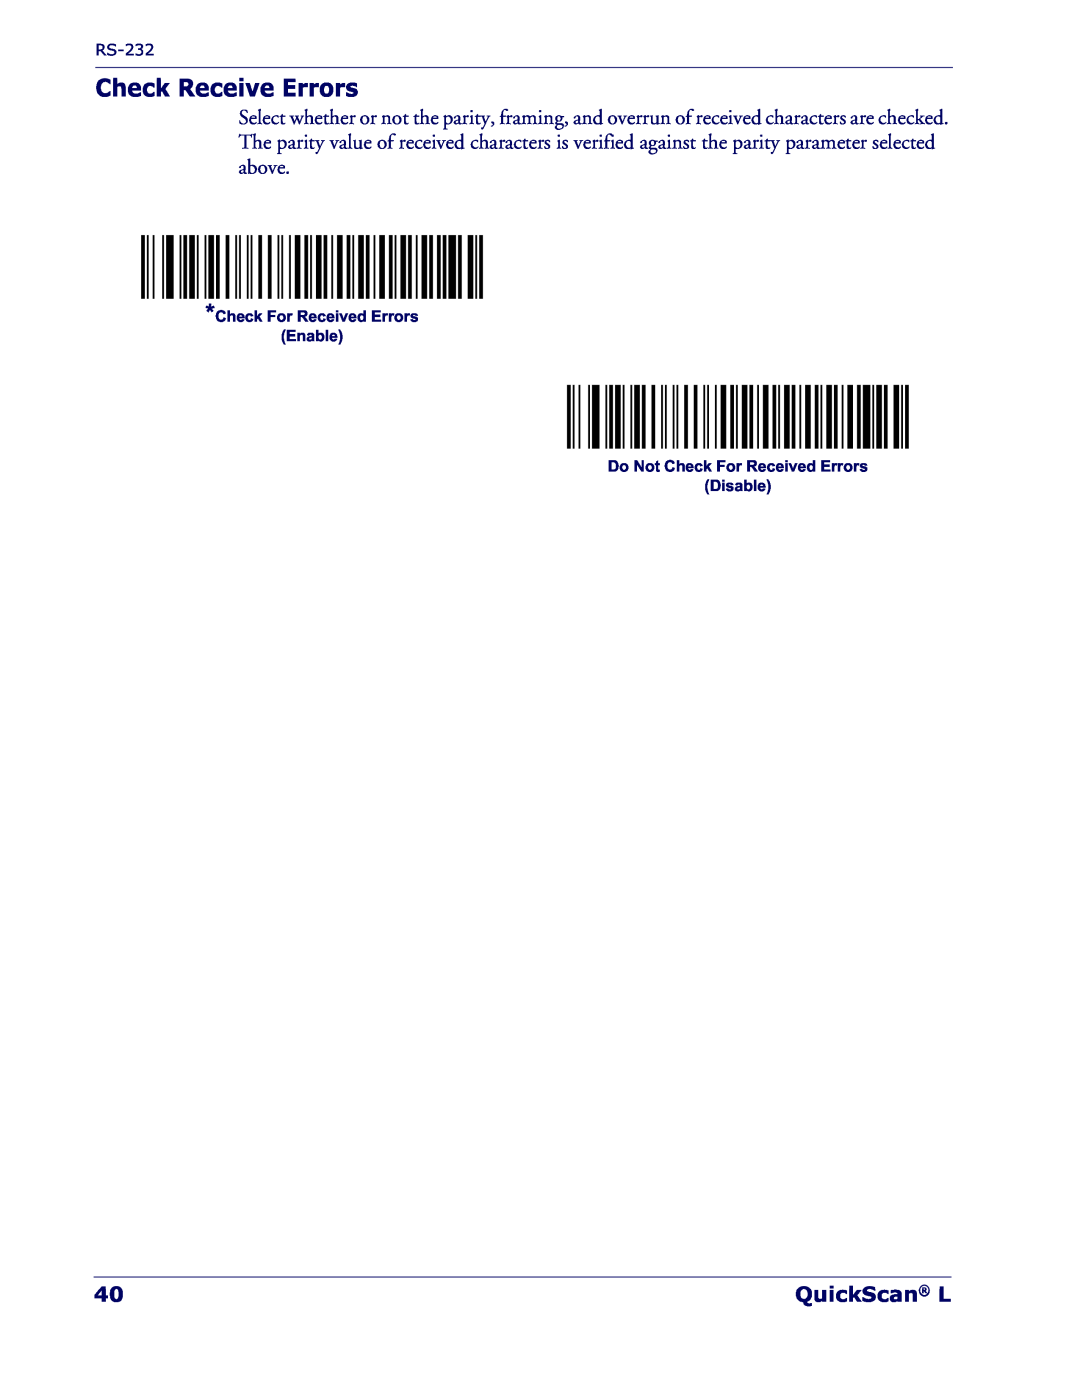 Datalogic Scanning QD 2300 manual Check Receive Errors, QuickScan L, Disable 